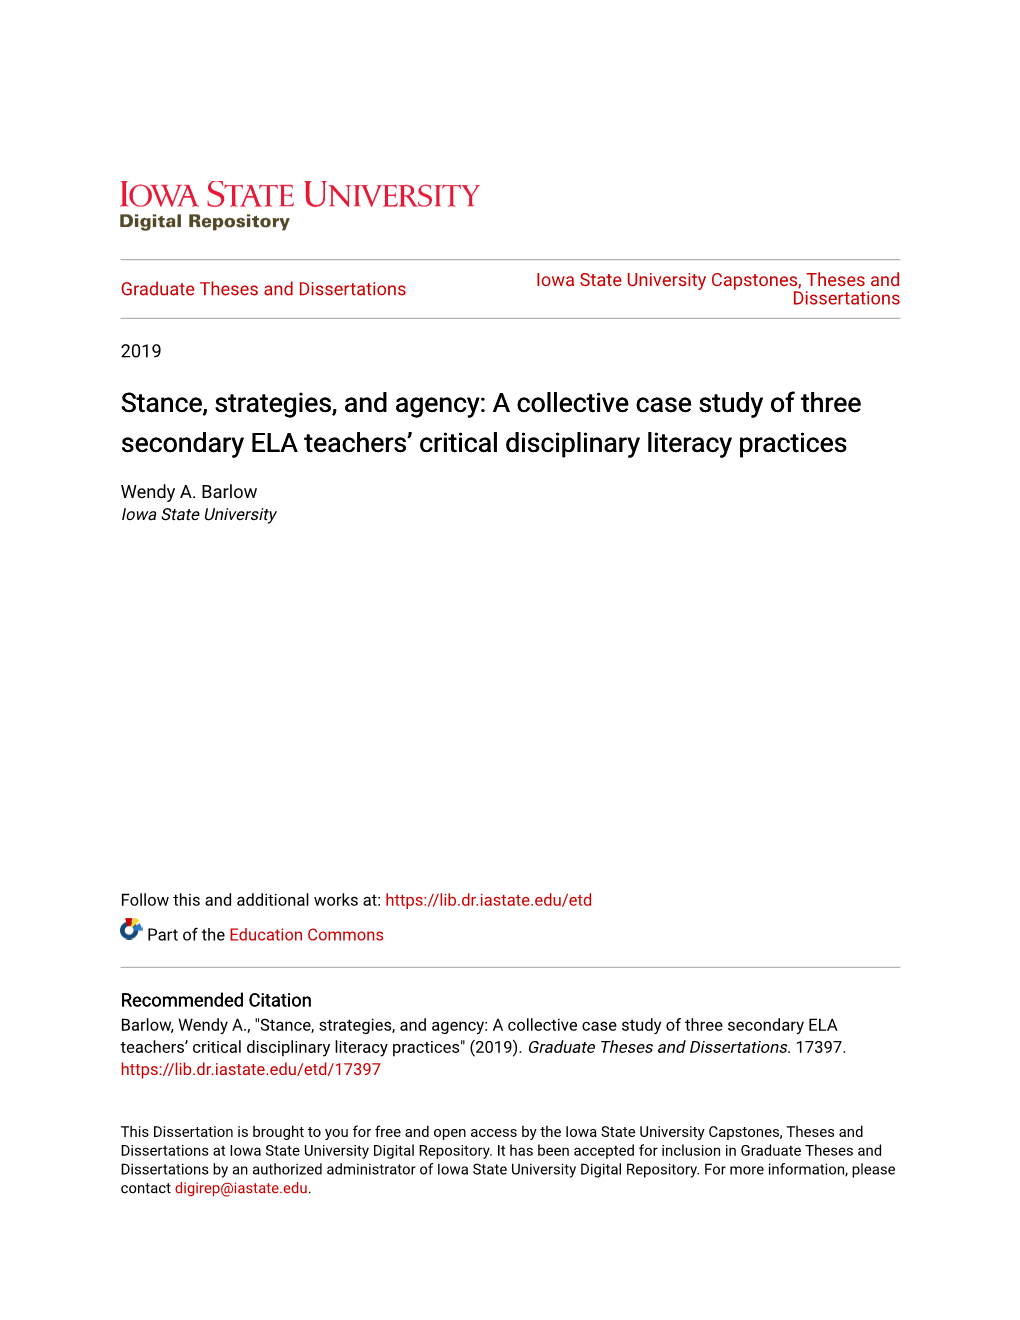 A Collective Case Study of Three Secondary ELA Teachers' Critical